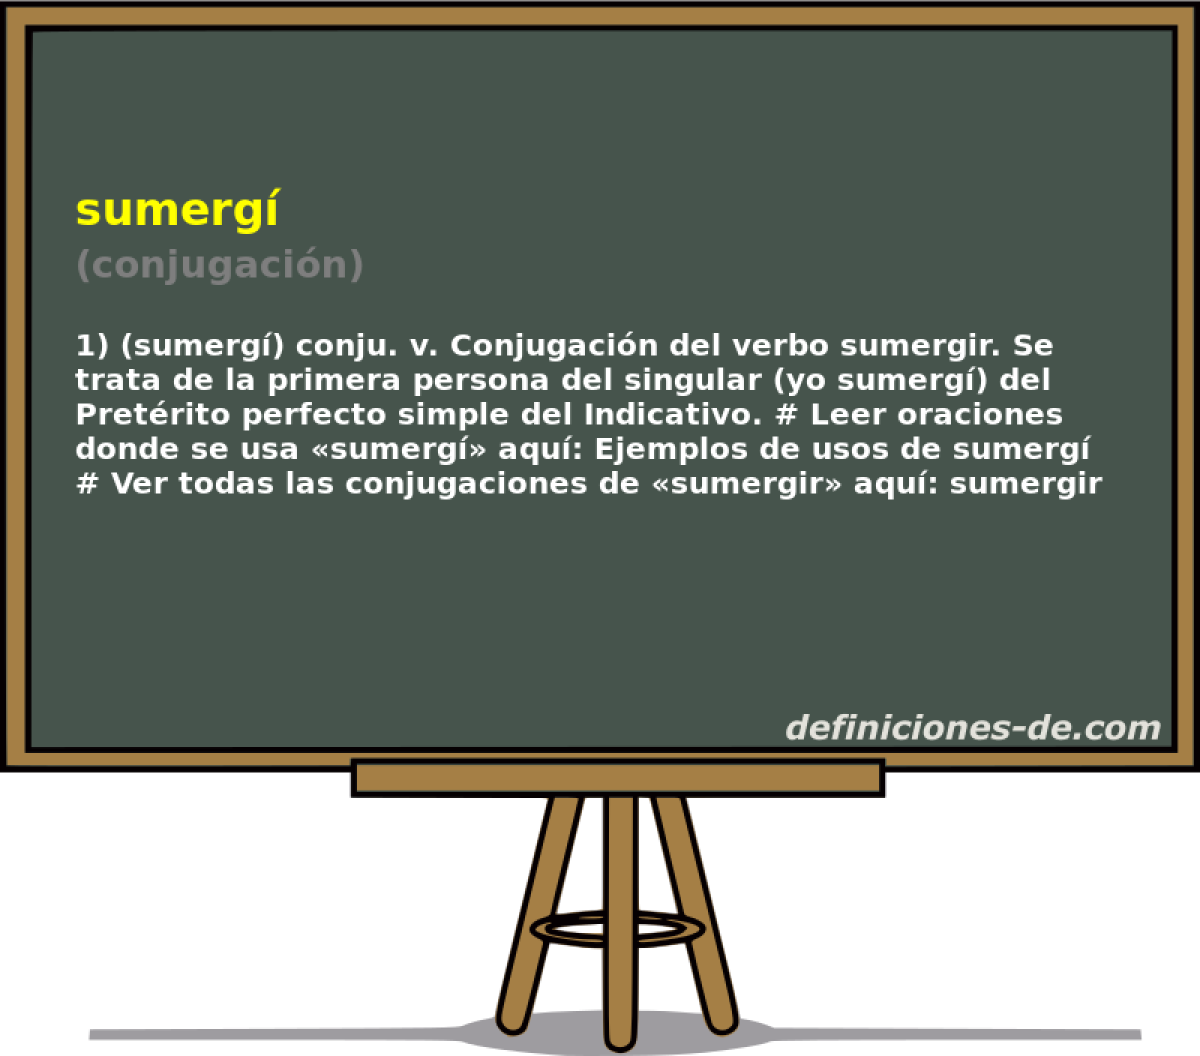 sumerg (conjugacin)